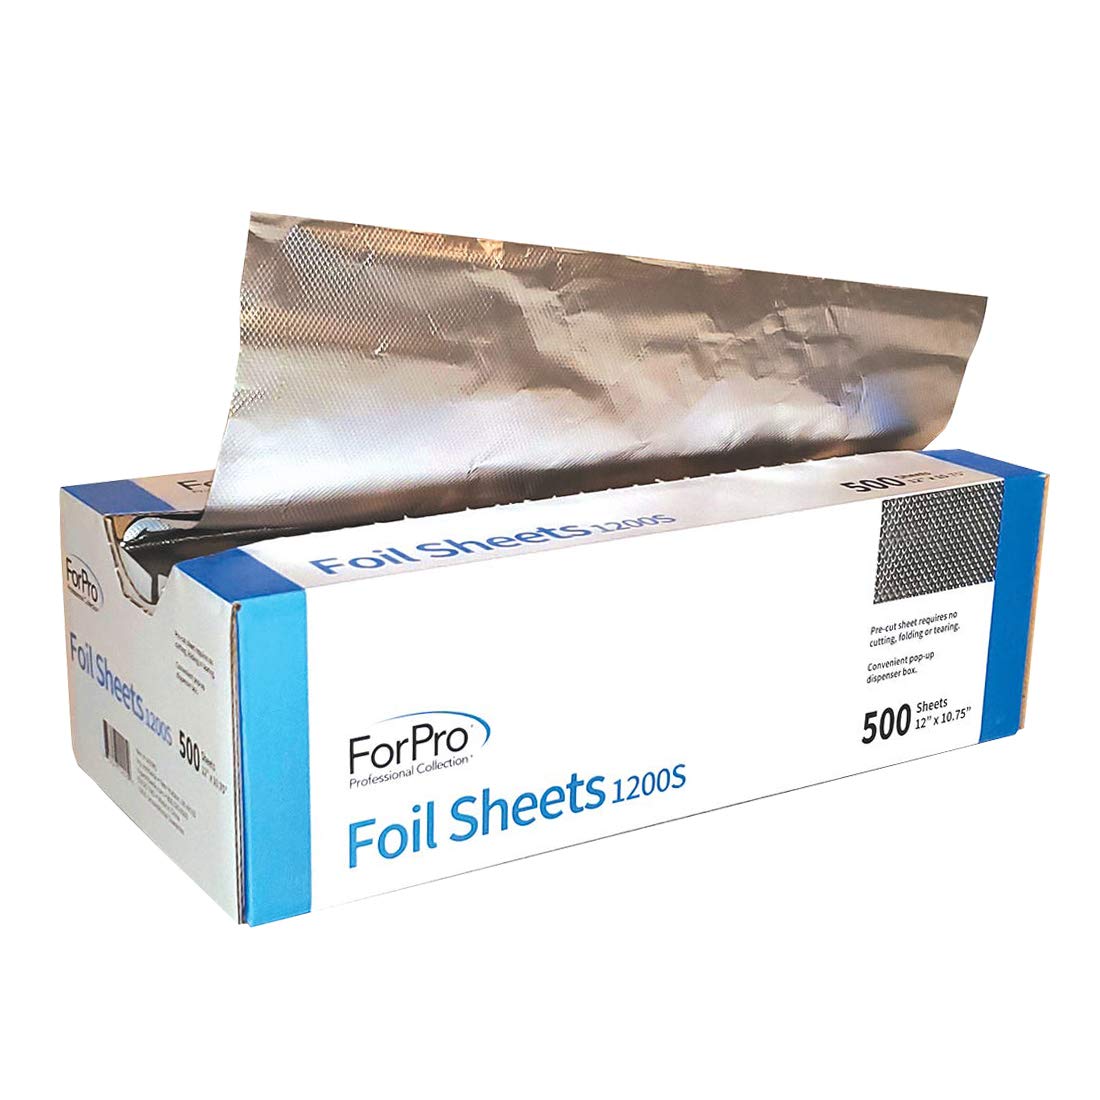 ForPro Embossed Foil Sheets 900S, Aluminum Foil, Pop-Up Dispenser, for Hair  Color Application and Highlighting, Food Safe, 9” W x 10.75” L, 500-Count